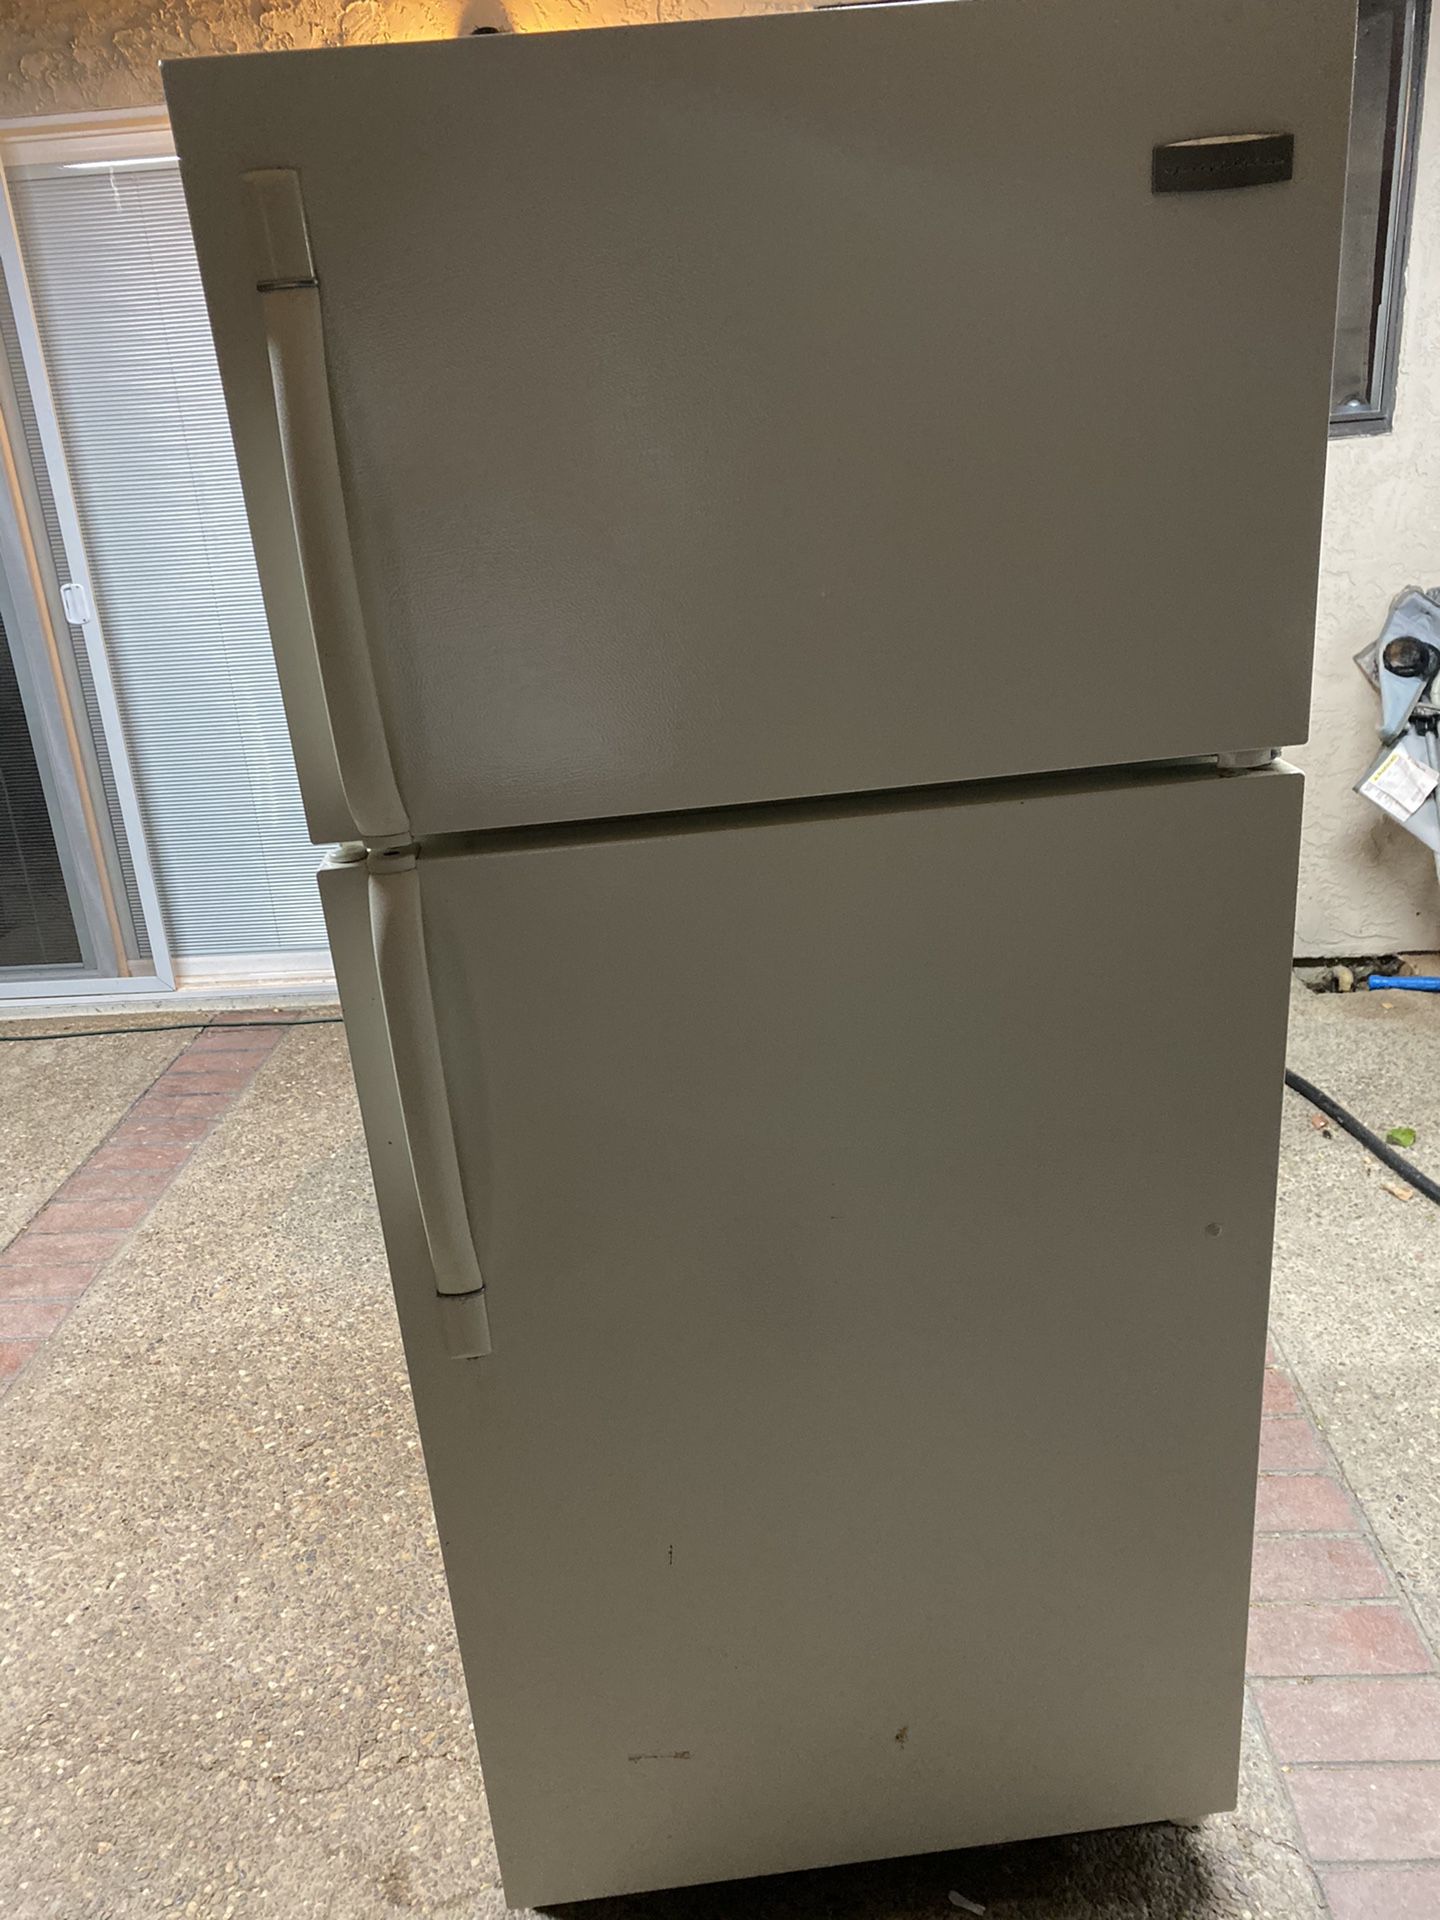 Fridgeair fridge refrigerator with freezer